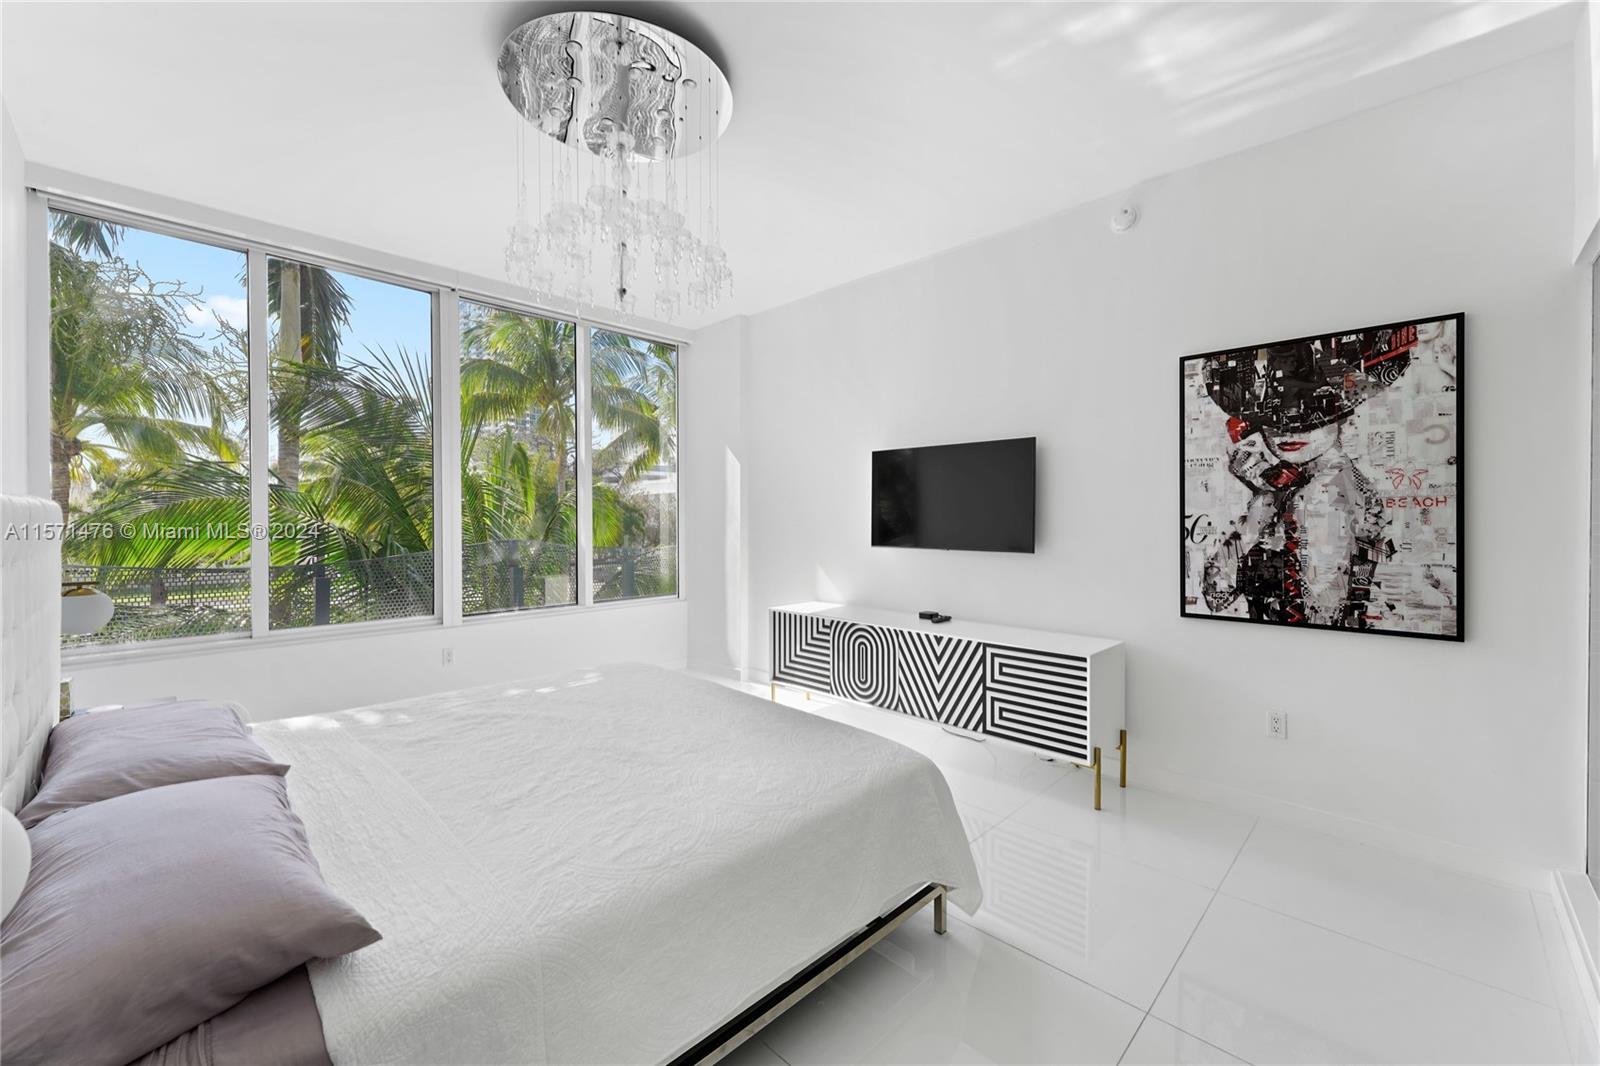 Property for Sale at 2100 Park Ave 201, Miami Beach, Miami-Dade County, Florida - Bedrooms: 3 
Bathrooms: 2  - $1,390,000